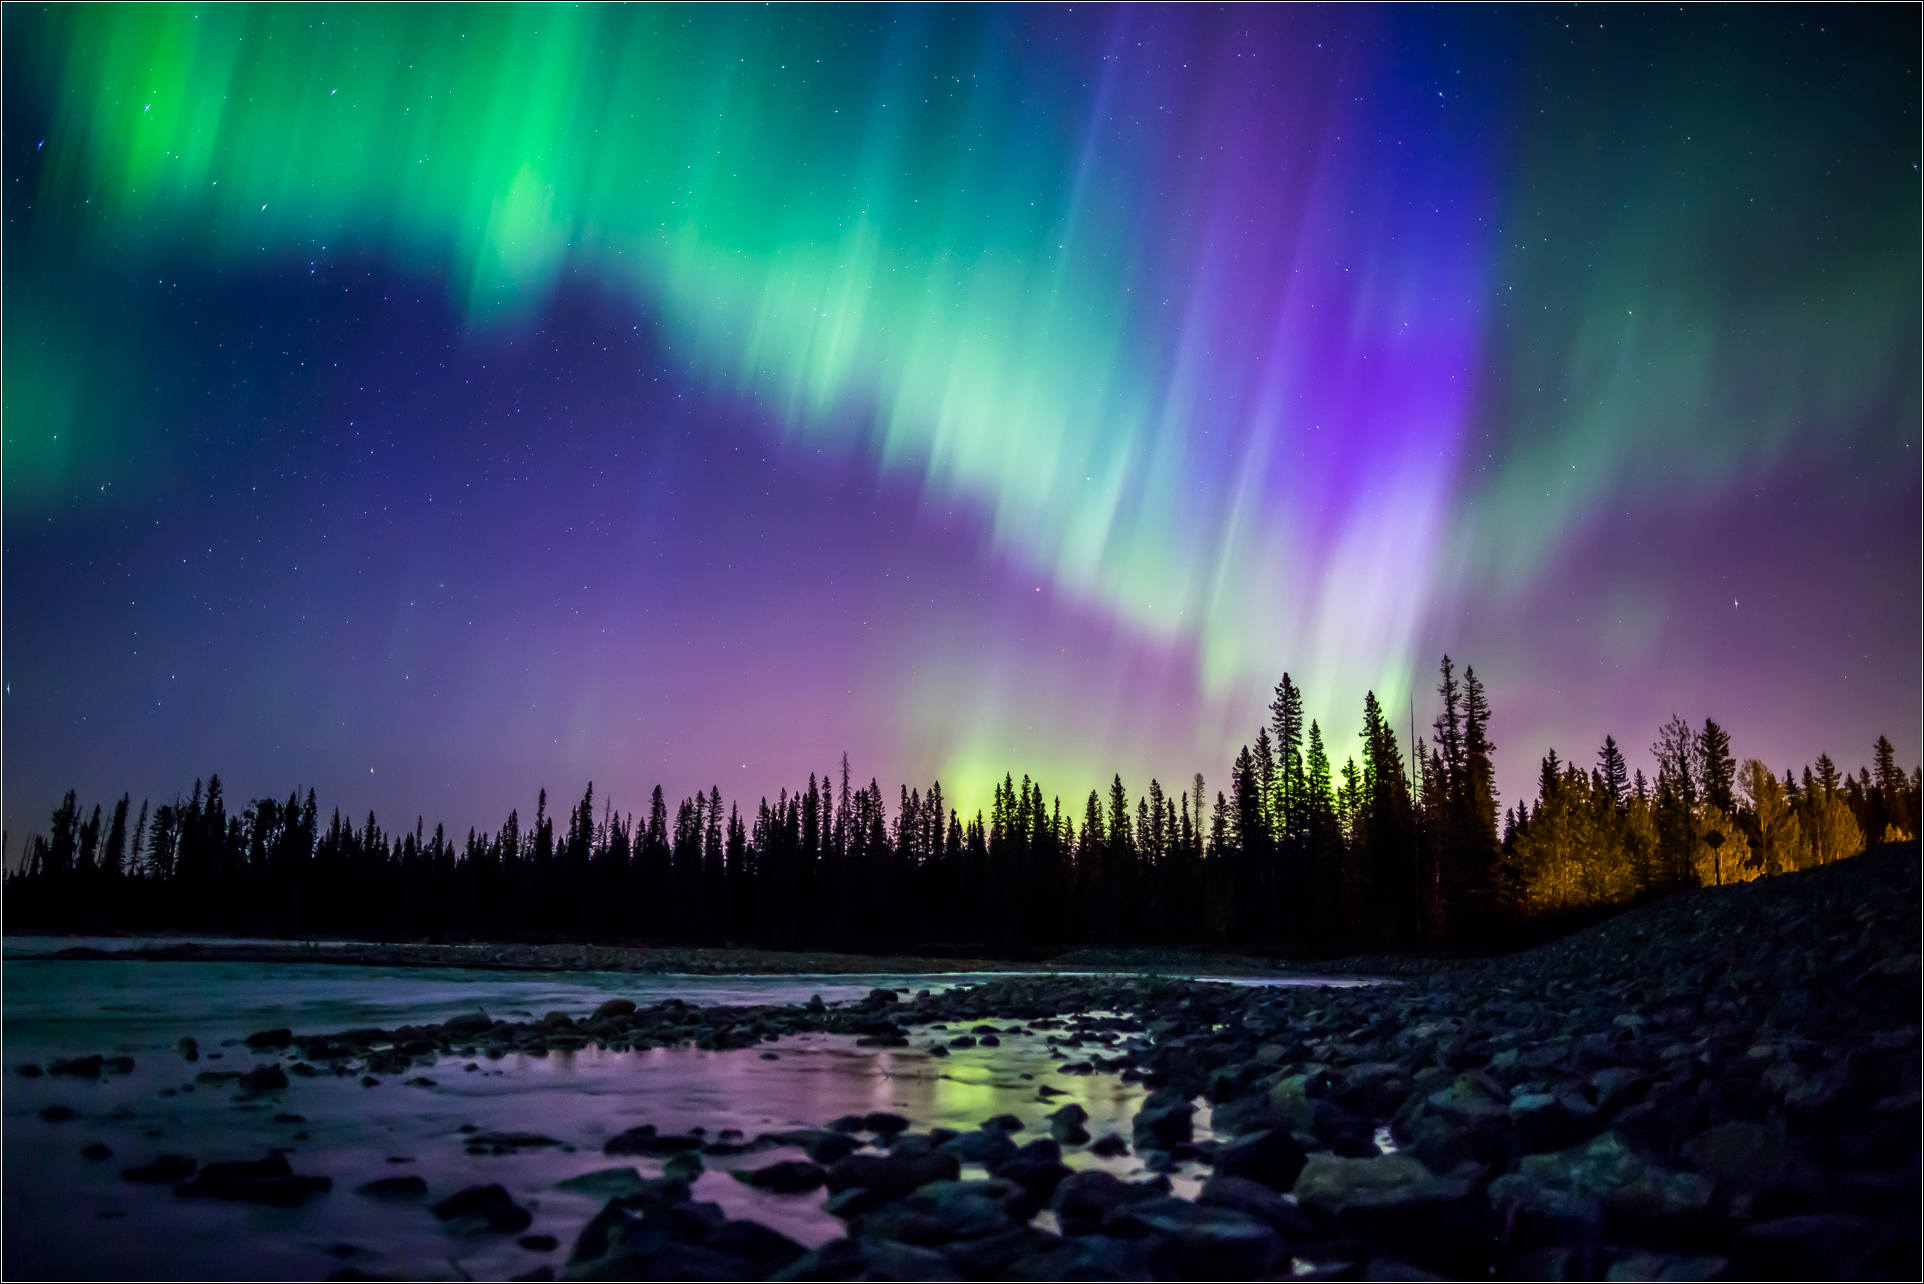 mothers-day-aurora-borealis-c2a9-christopher-martin-5949.jpg